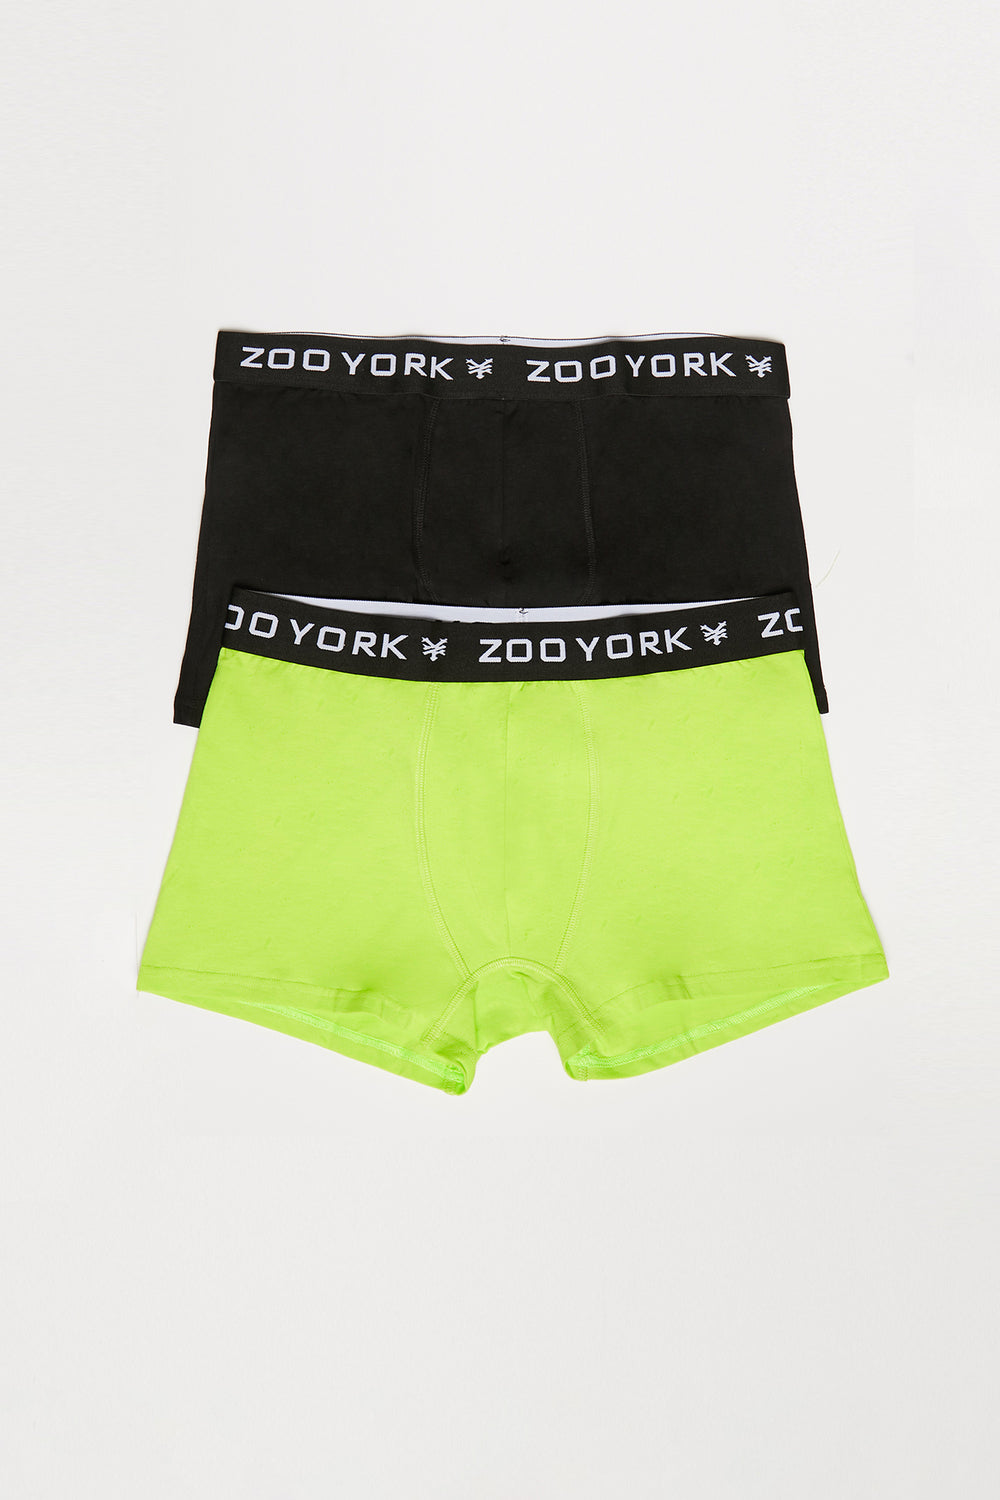 Zoo York Mens 2-Pack Boxer Briefs Green